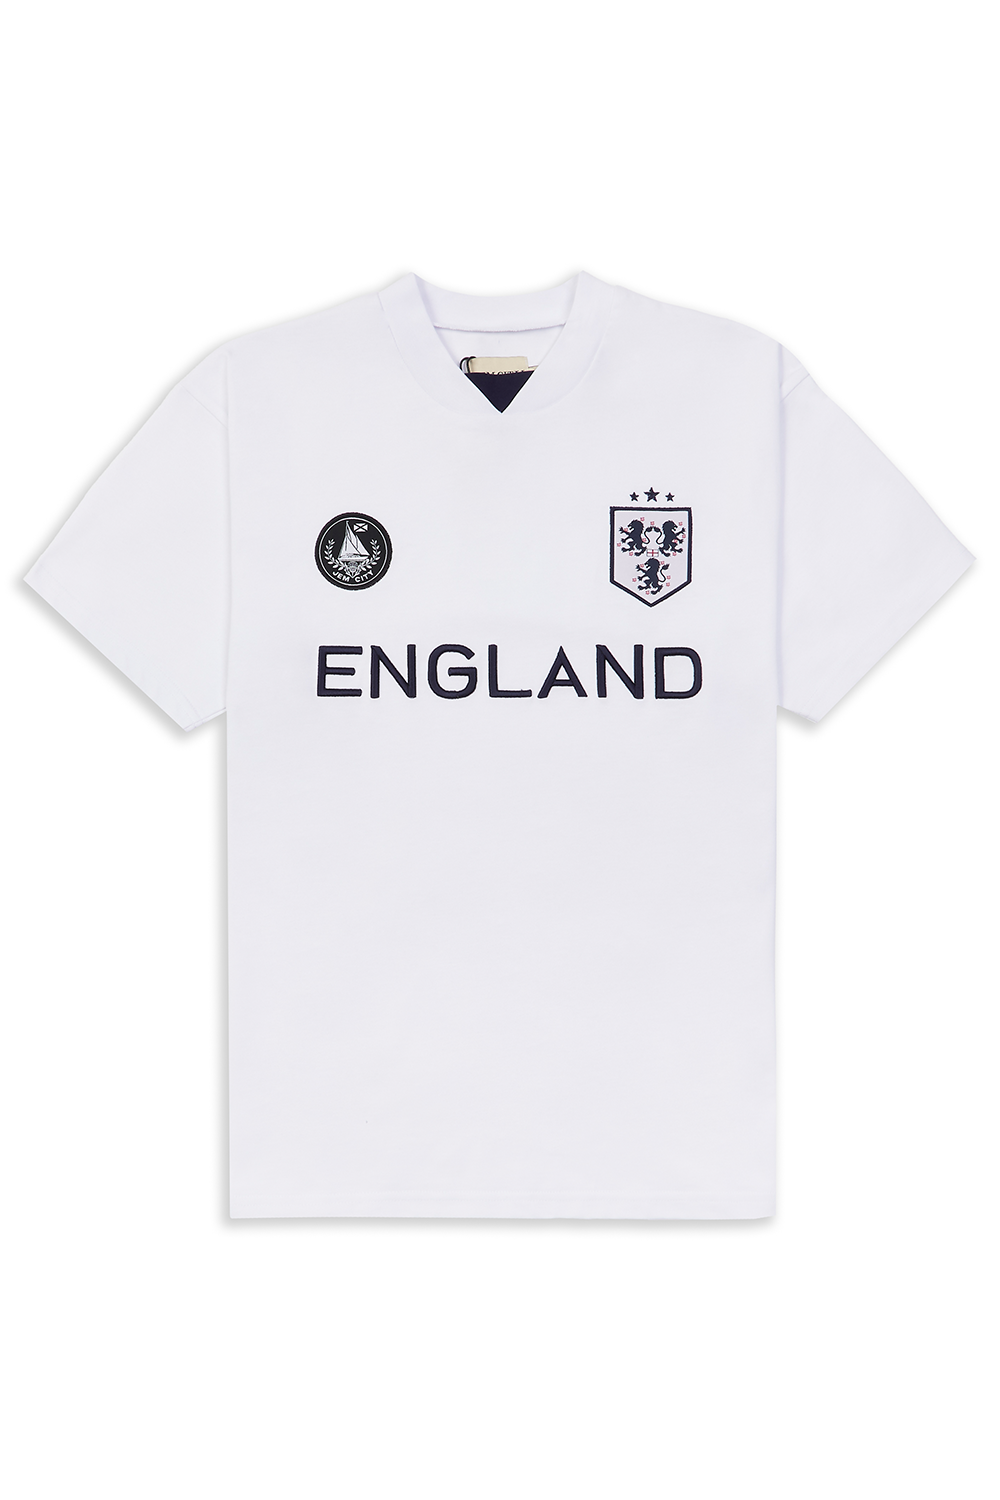 England Euros Inspired T-Shirt